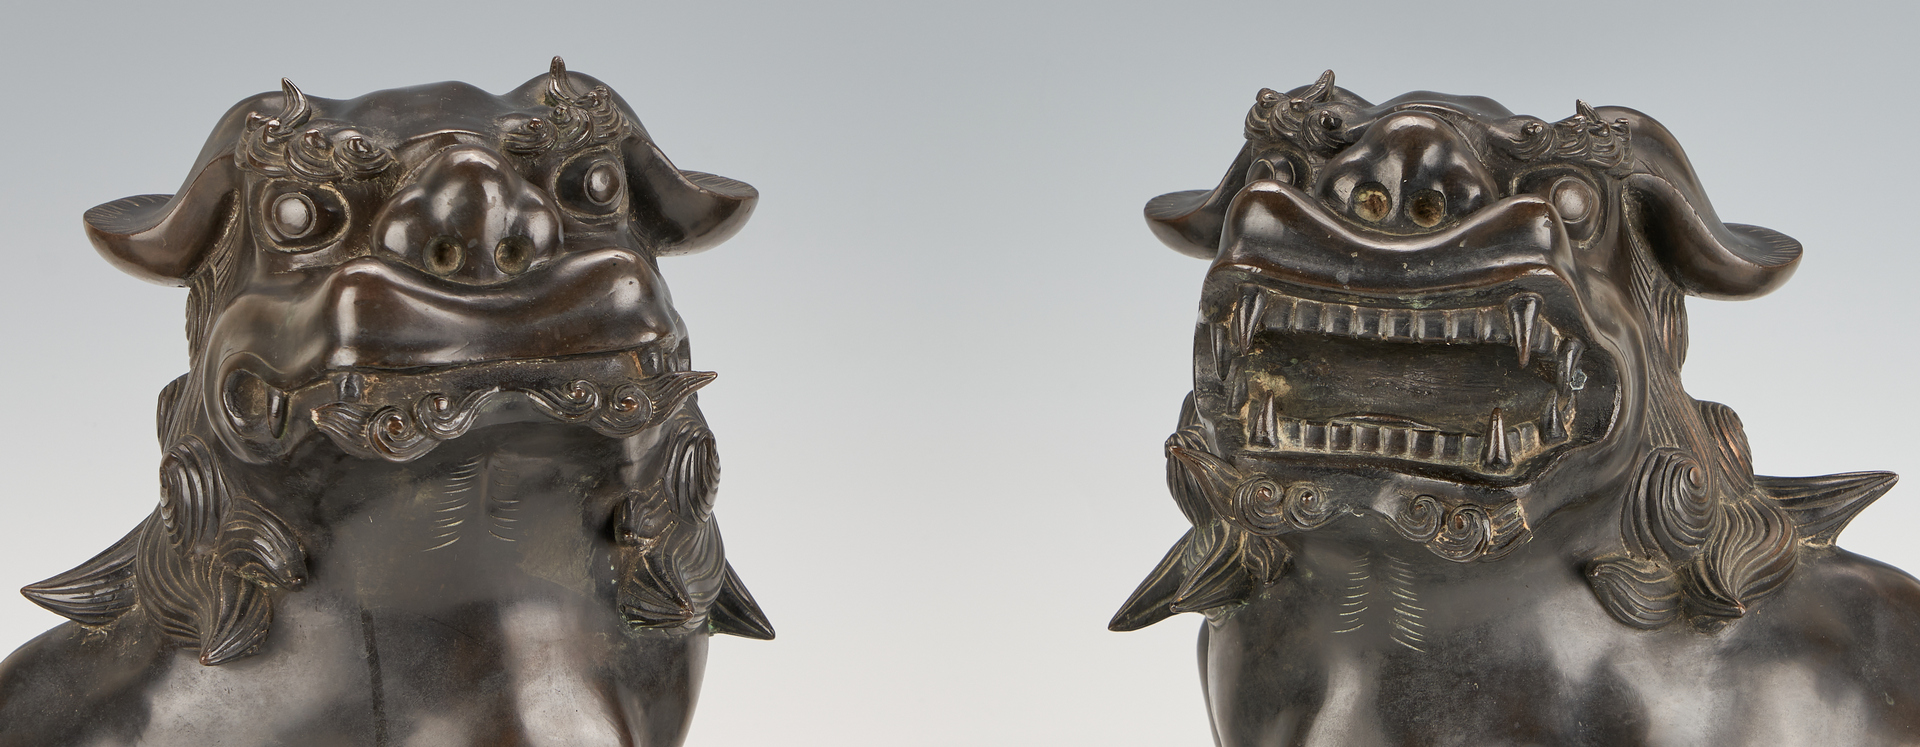 Lot 20: Pair Japanese Bronze Guardian or Temple Foo Lions